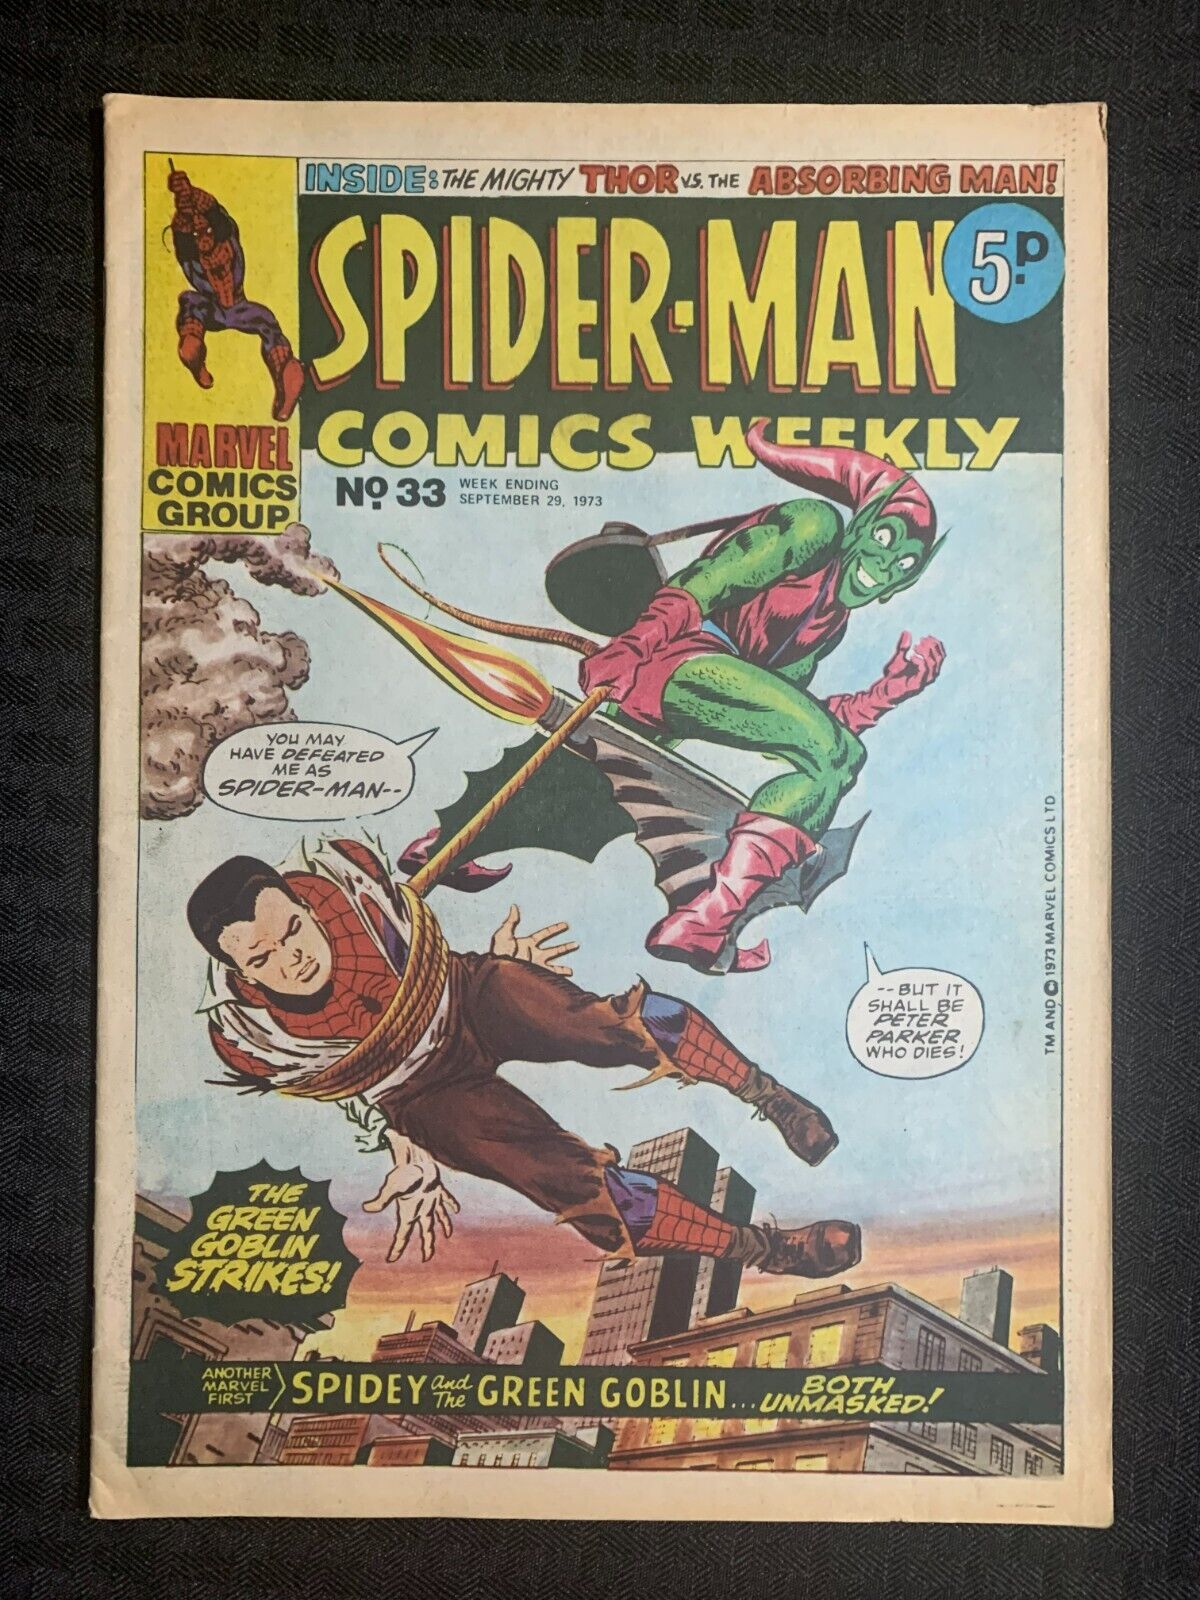 1973 Sept 29 SPIDER-MAN COMICS WEEKLY #33 FN 6.0 John Romita / Green Goblin